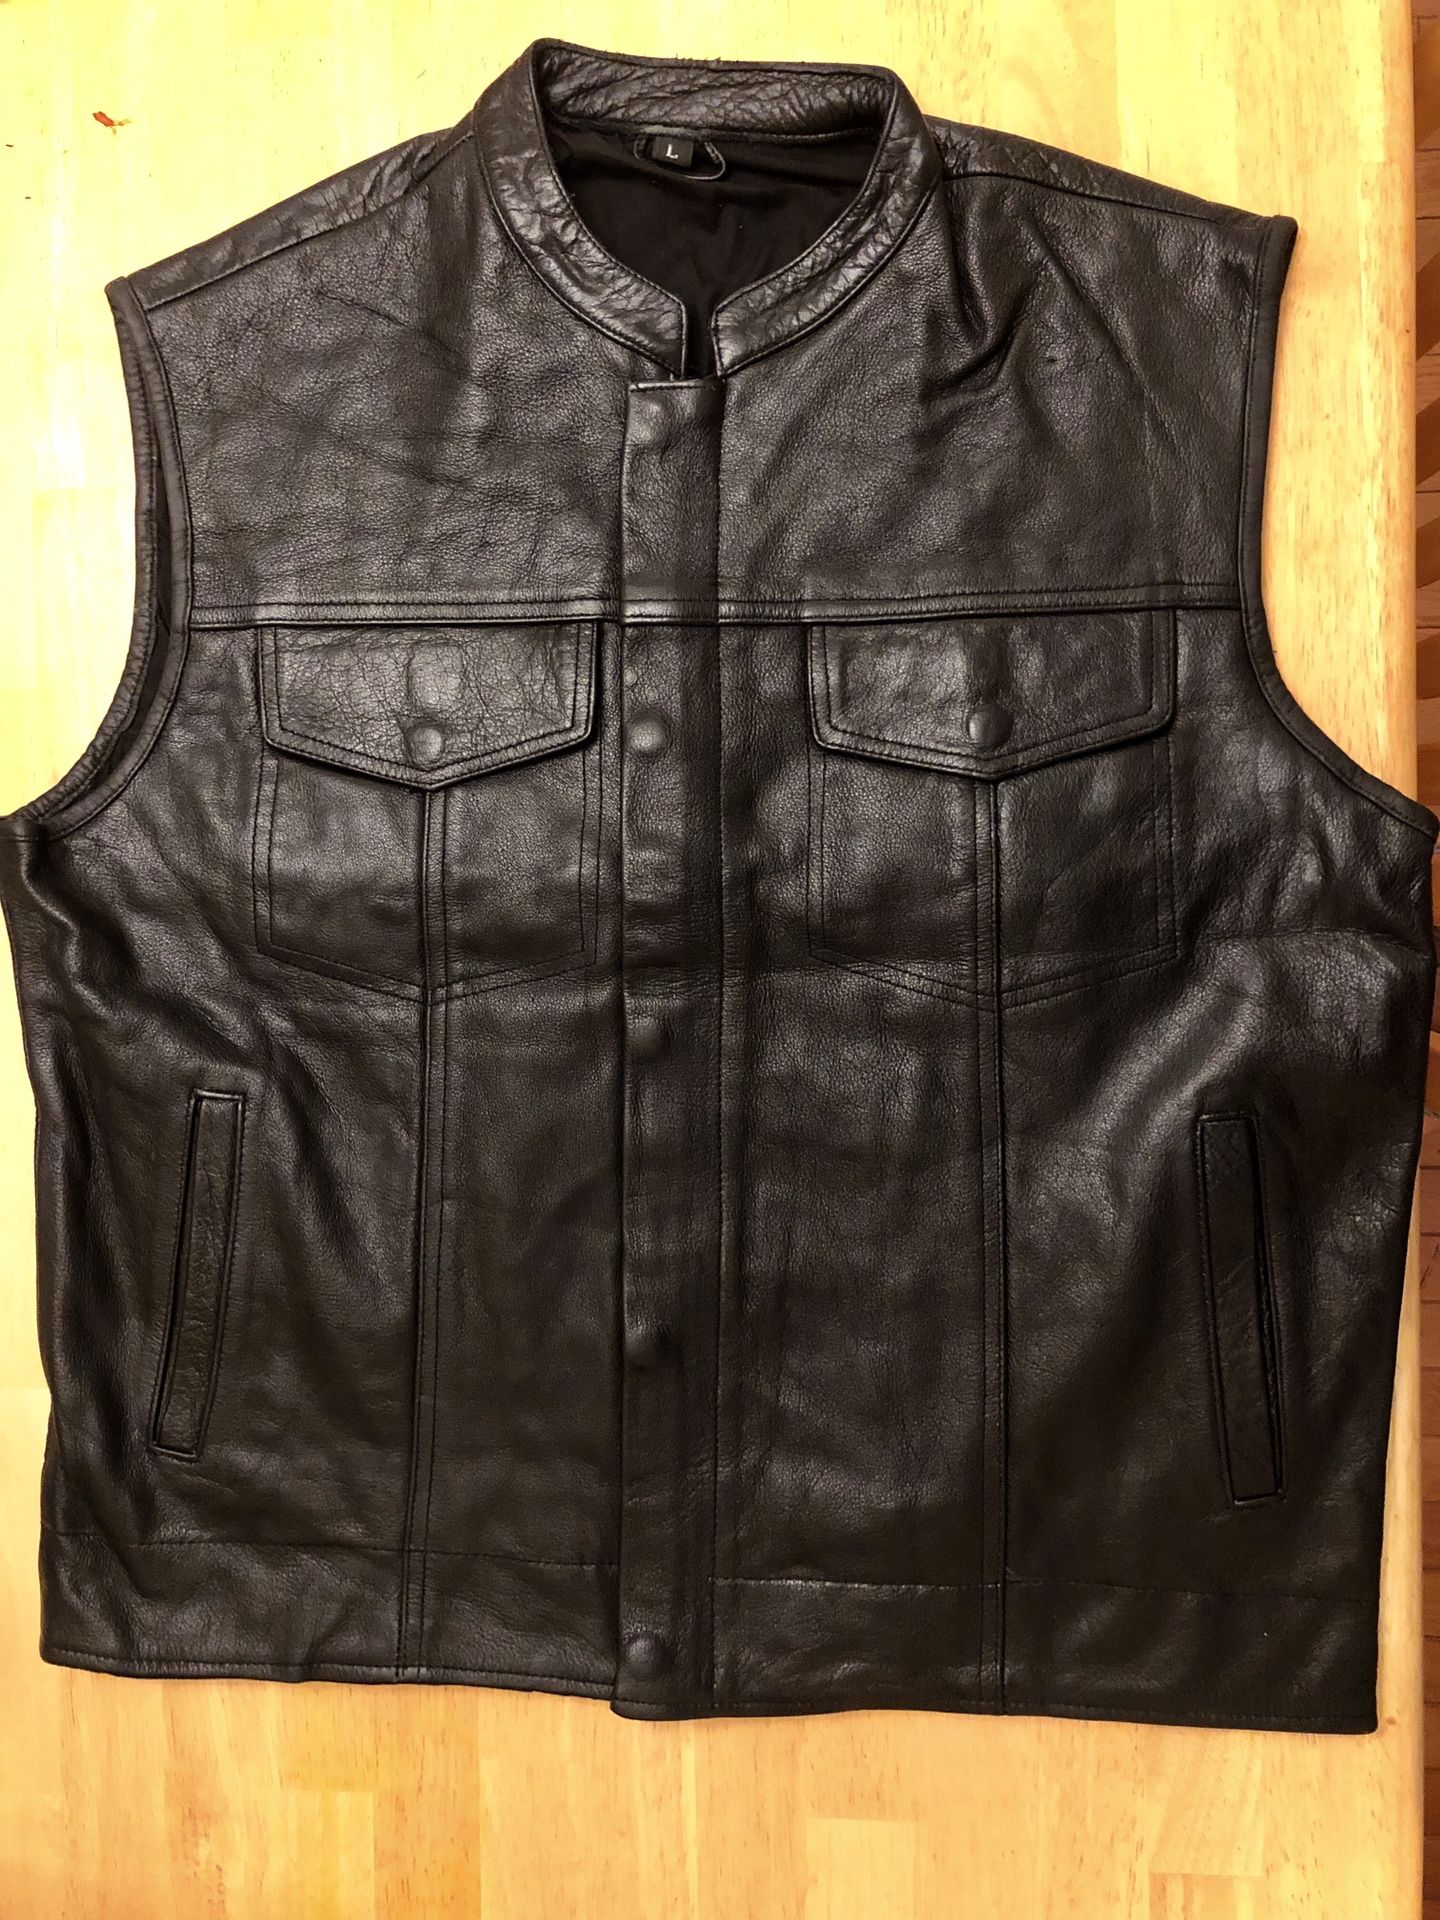 Motorcycle vest (club vest) jacket